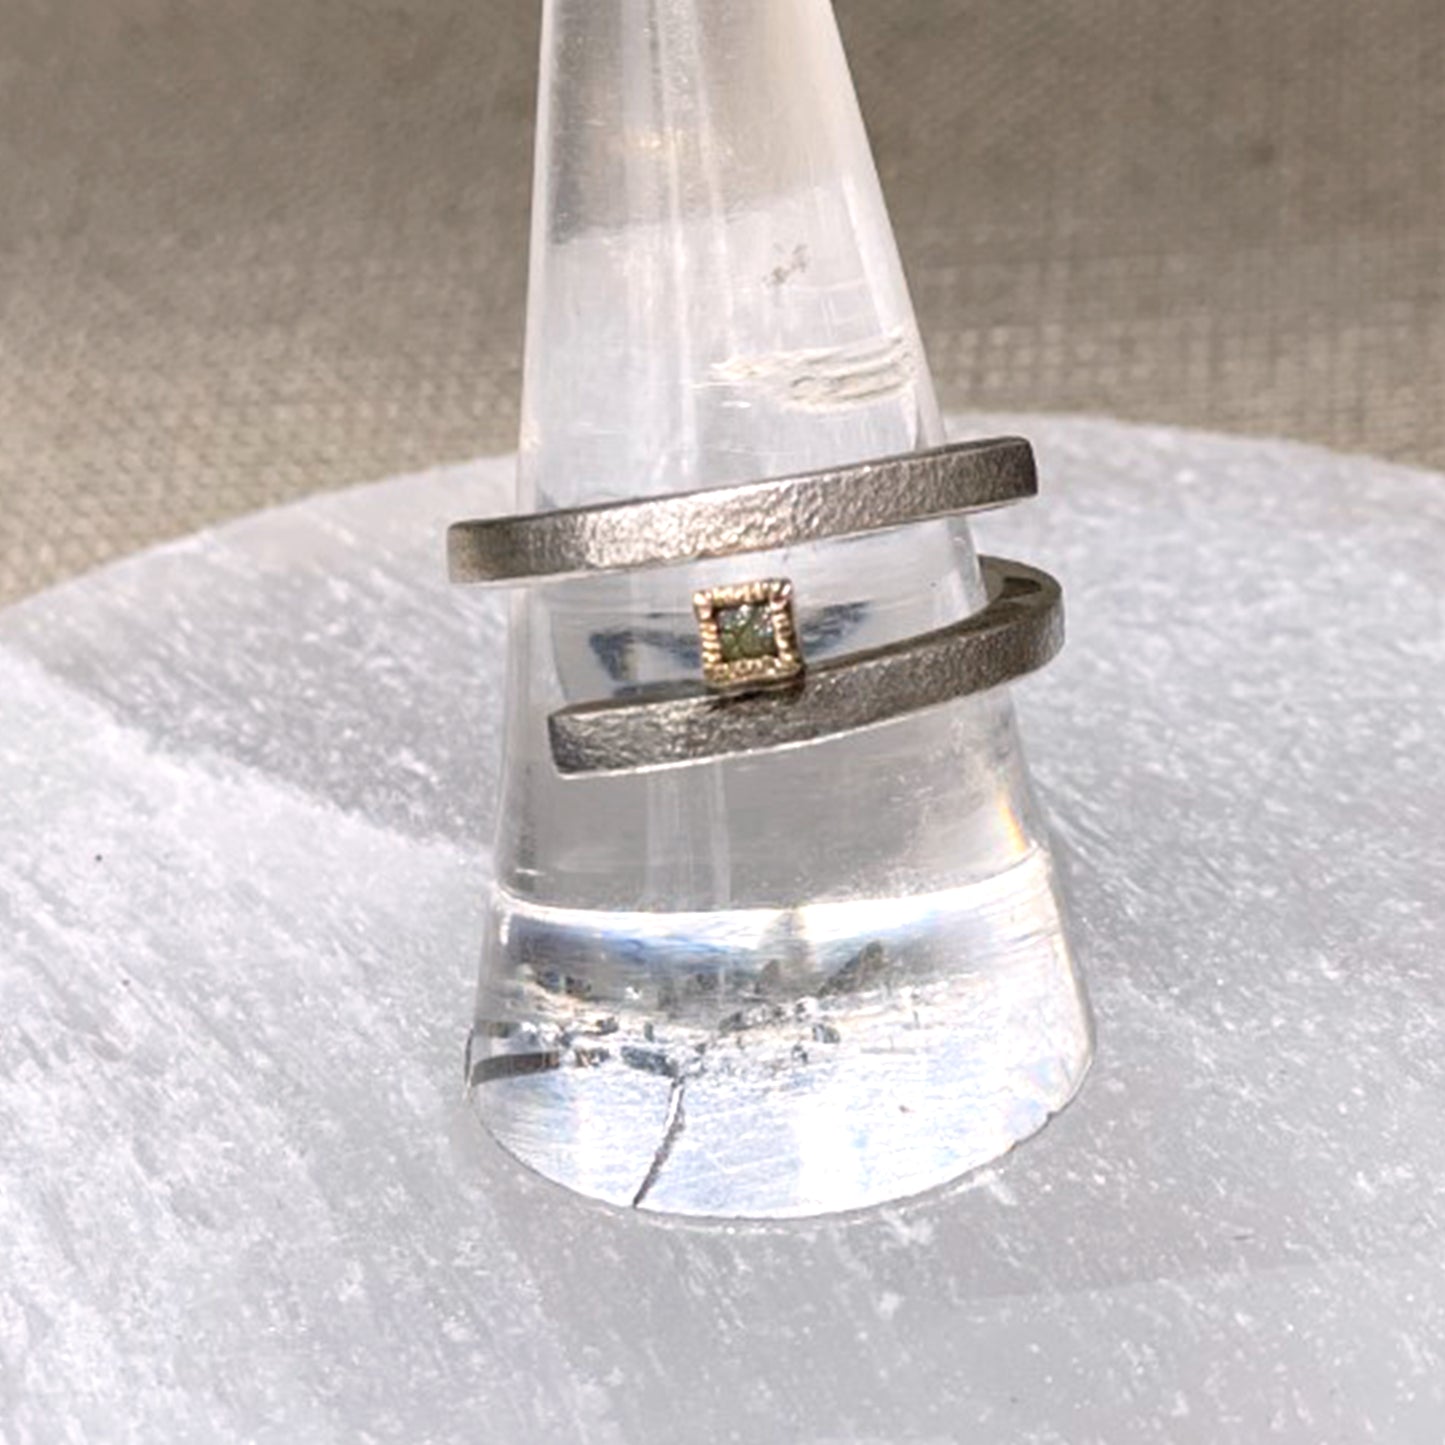 Ring with Raw Diamond (Adjustable)